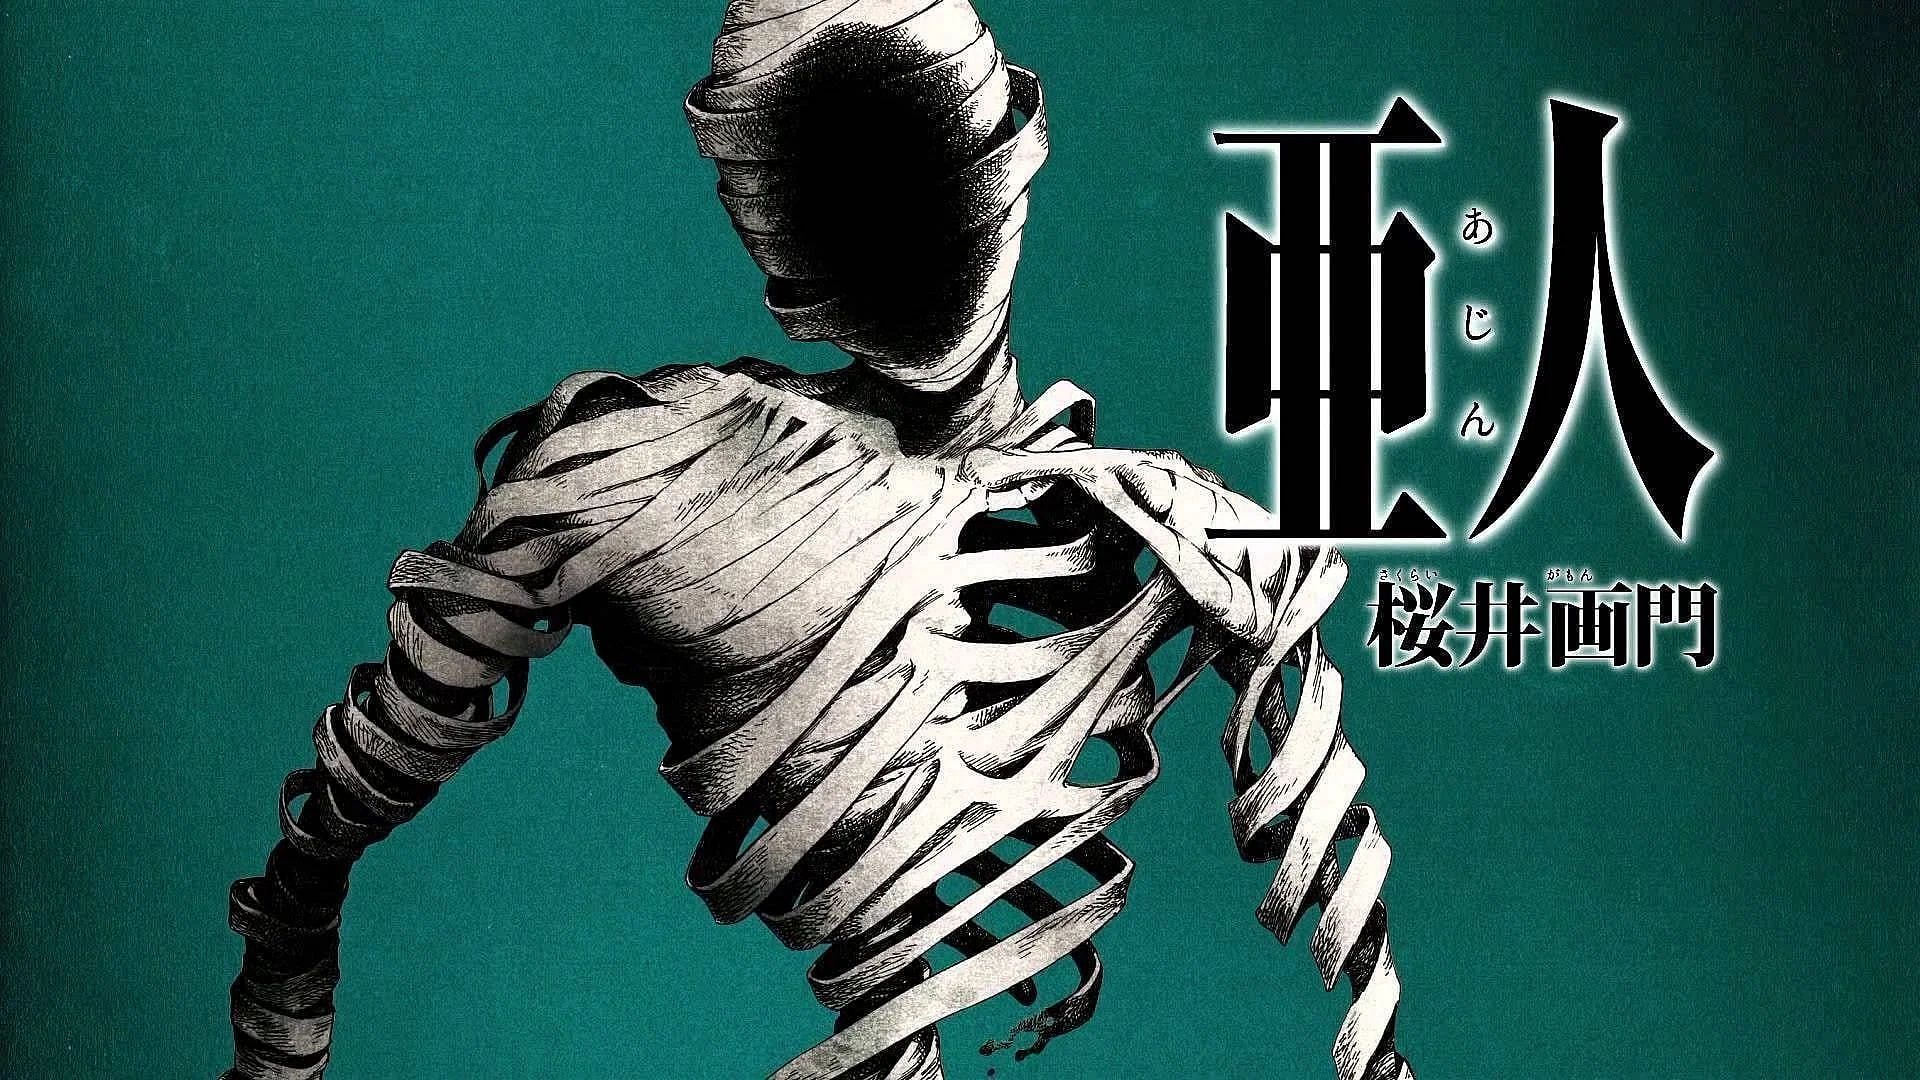 Horror Manga 'Ajin' Gets Film Trilogy Adaptation [Update 6/4